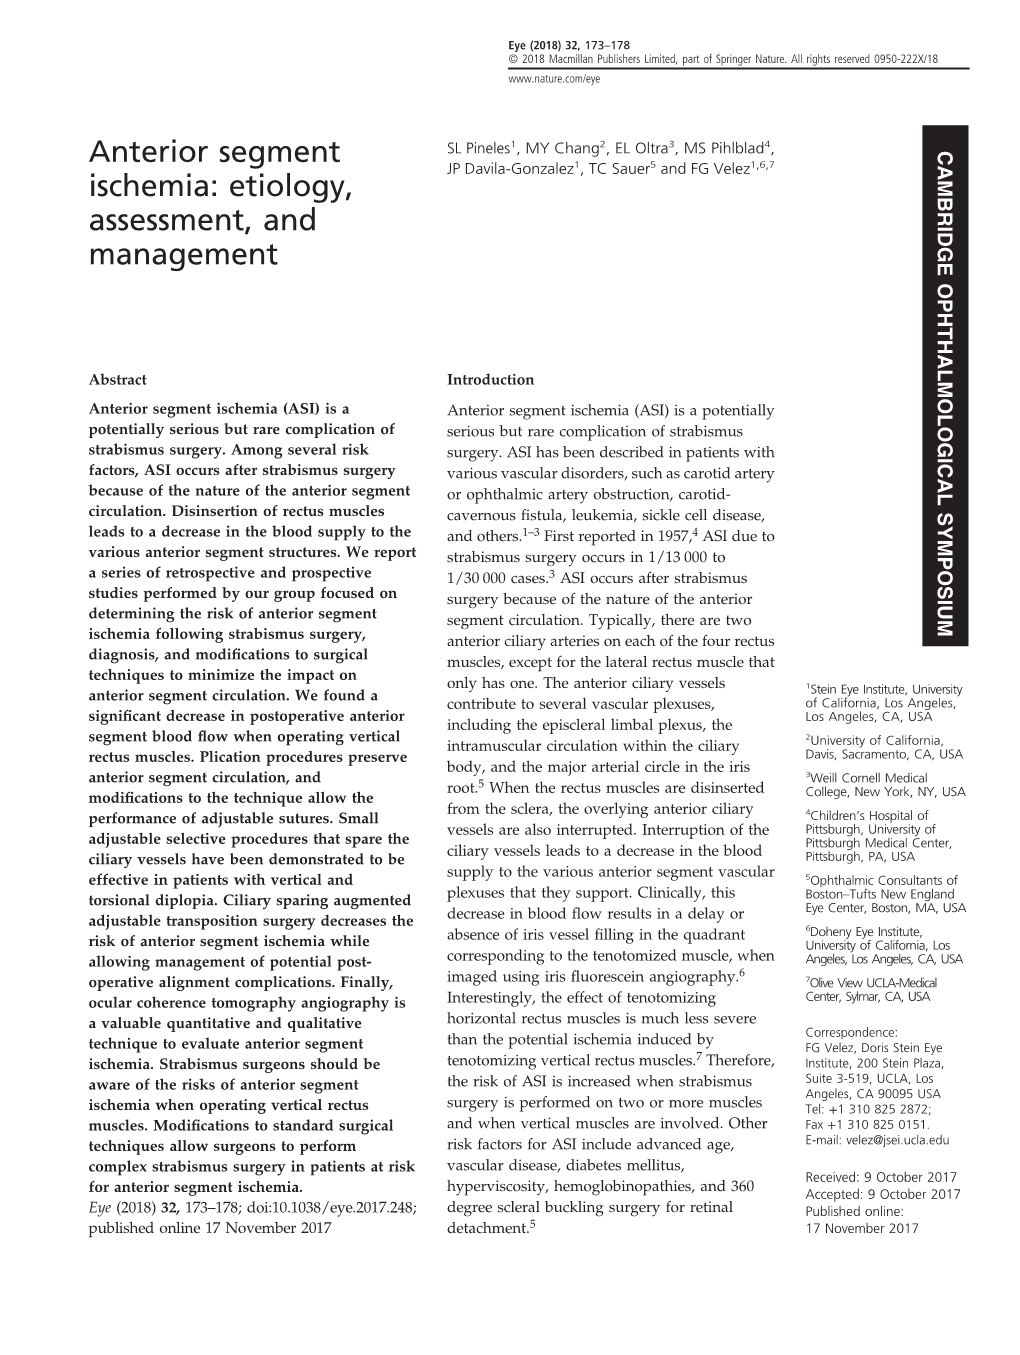 Anterior Segment Ischemia: Etiology, Assessment, and Management